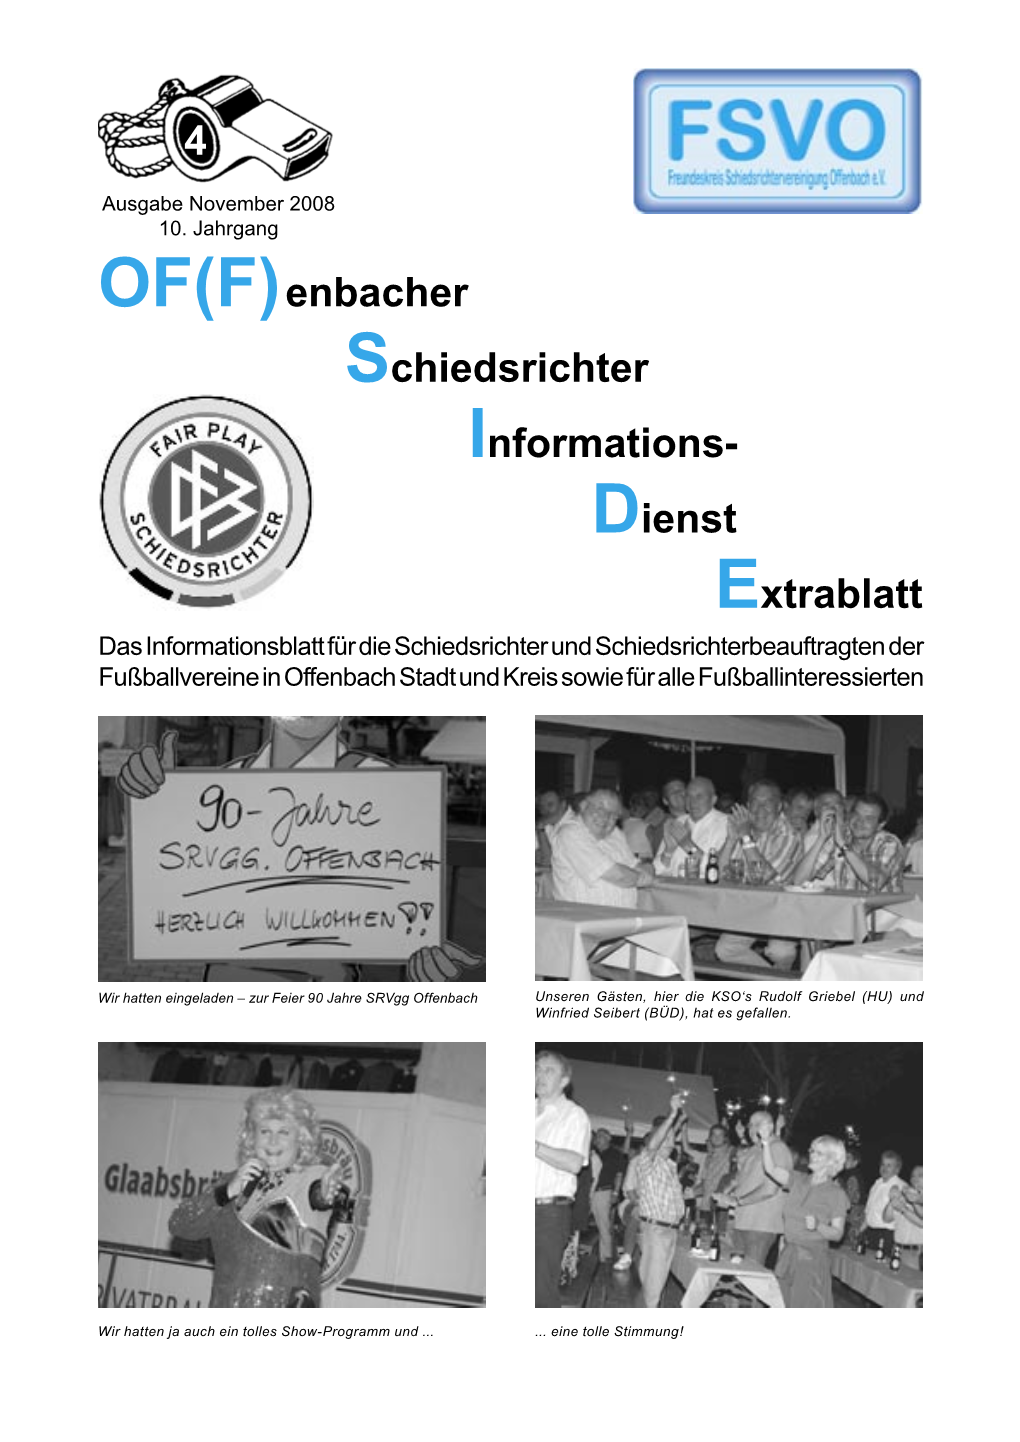 OF(F)Enbacher Schiedsrichter Informations- Dienst Extrablatt